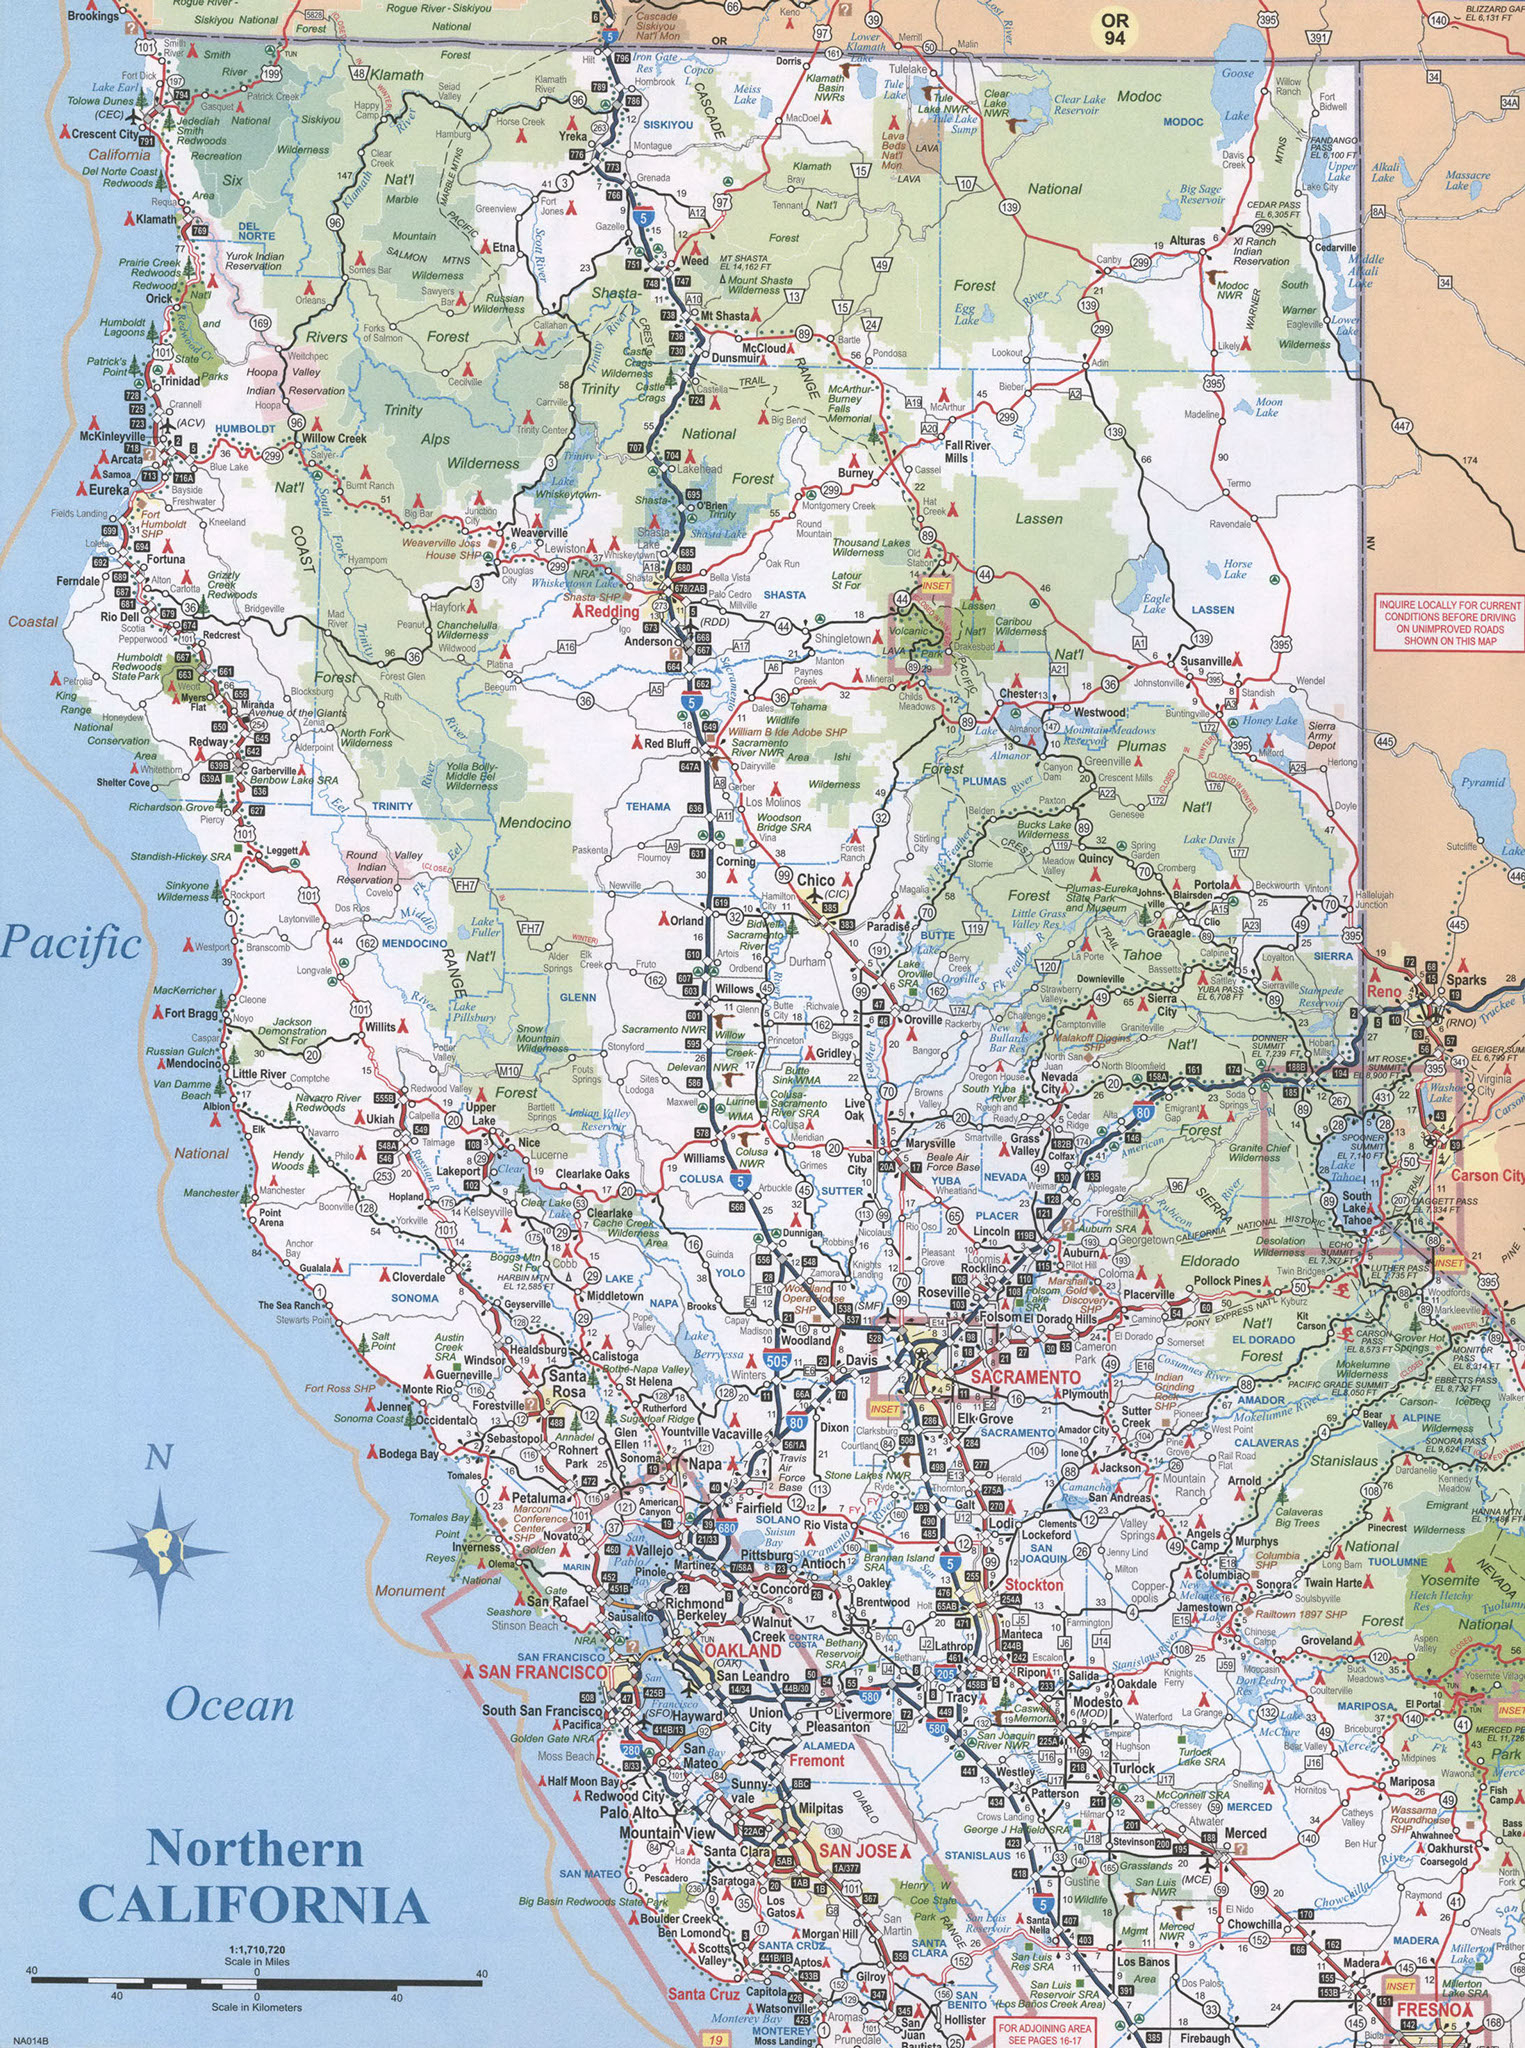 Maps Of California California Road Map Northern California Maps - Detailed Road Map Of Northern California